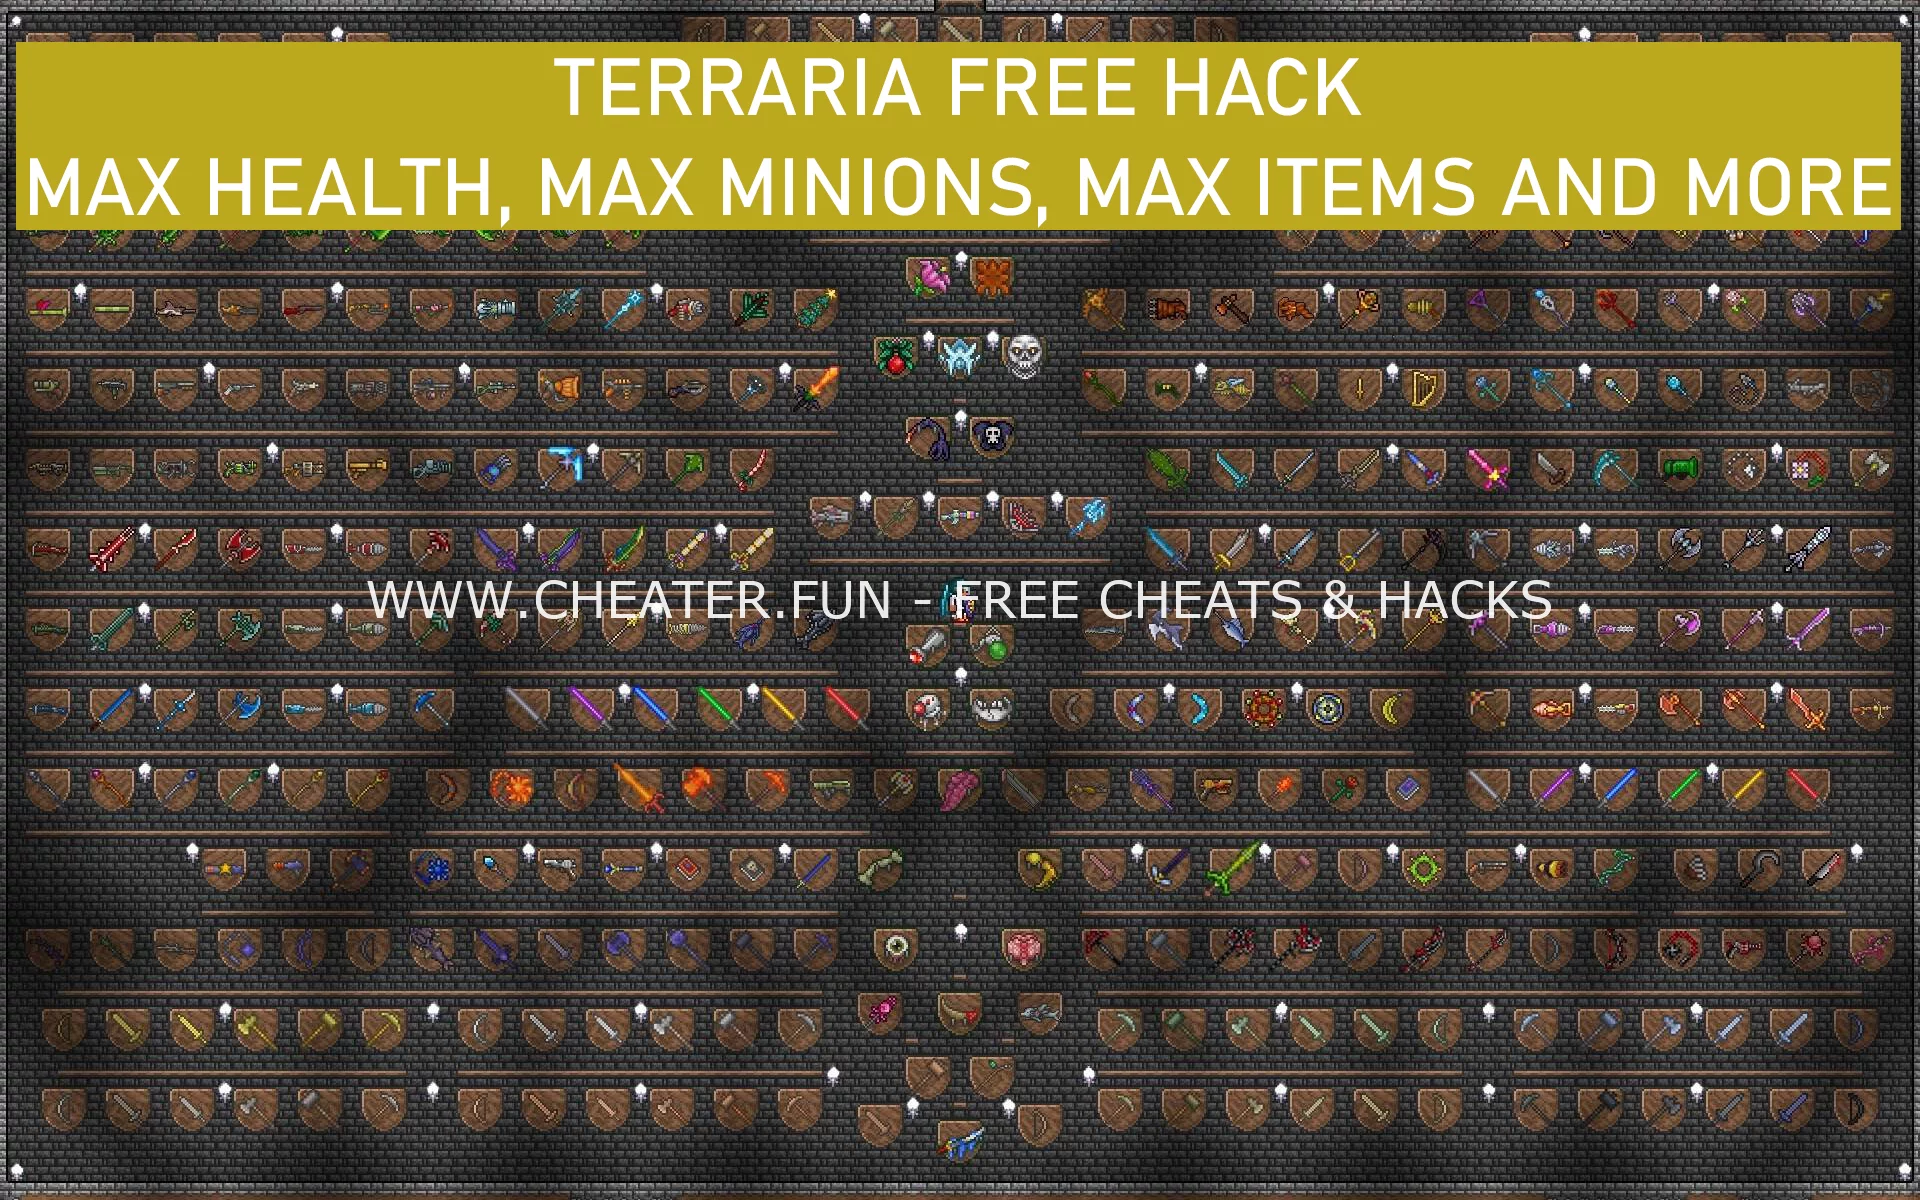 Terraria Free Hack - Max Health, Max Minions, Max Items and More